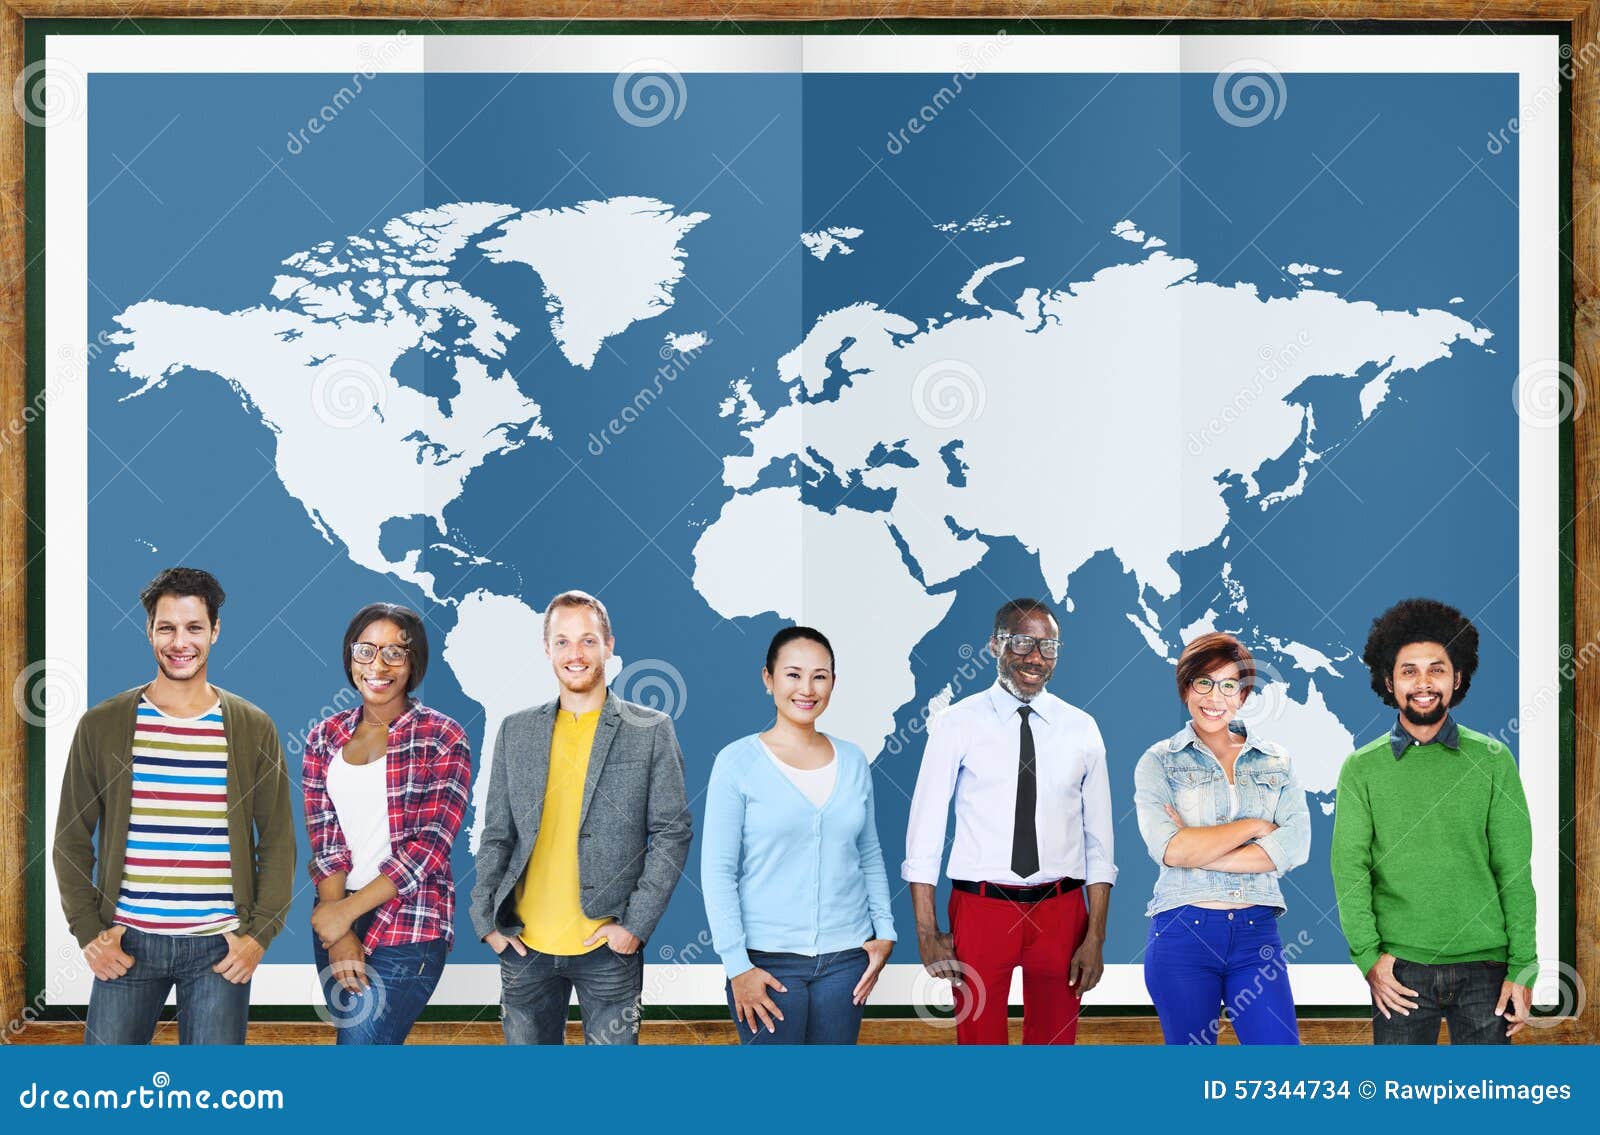 world global business cartography globalization international